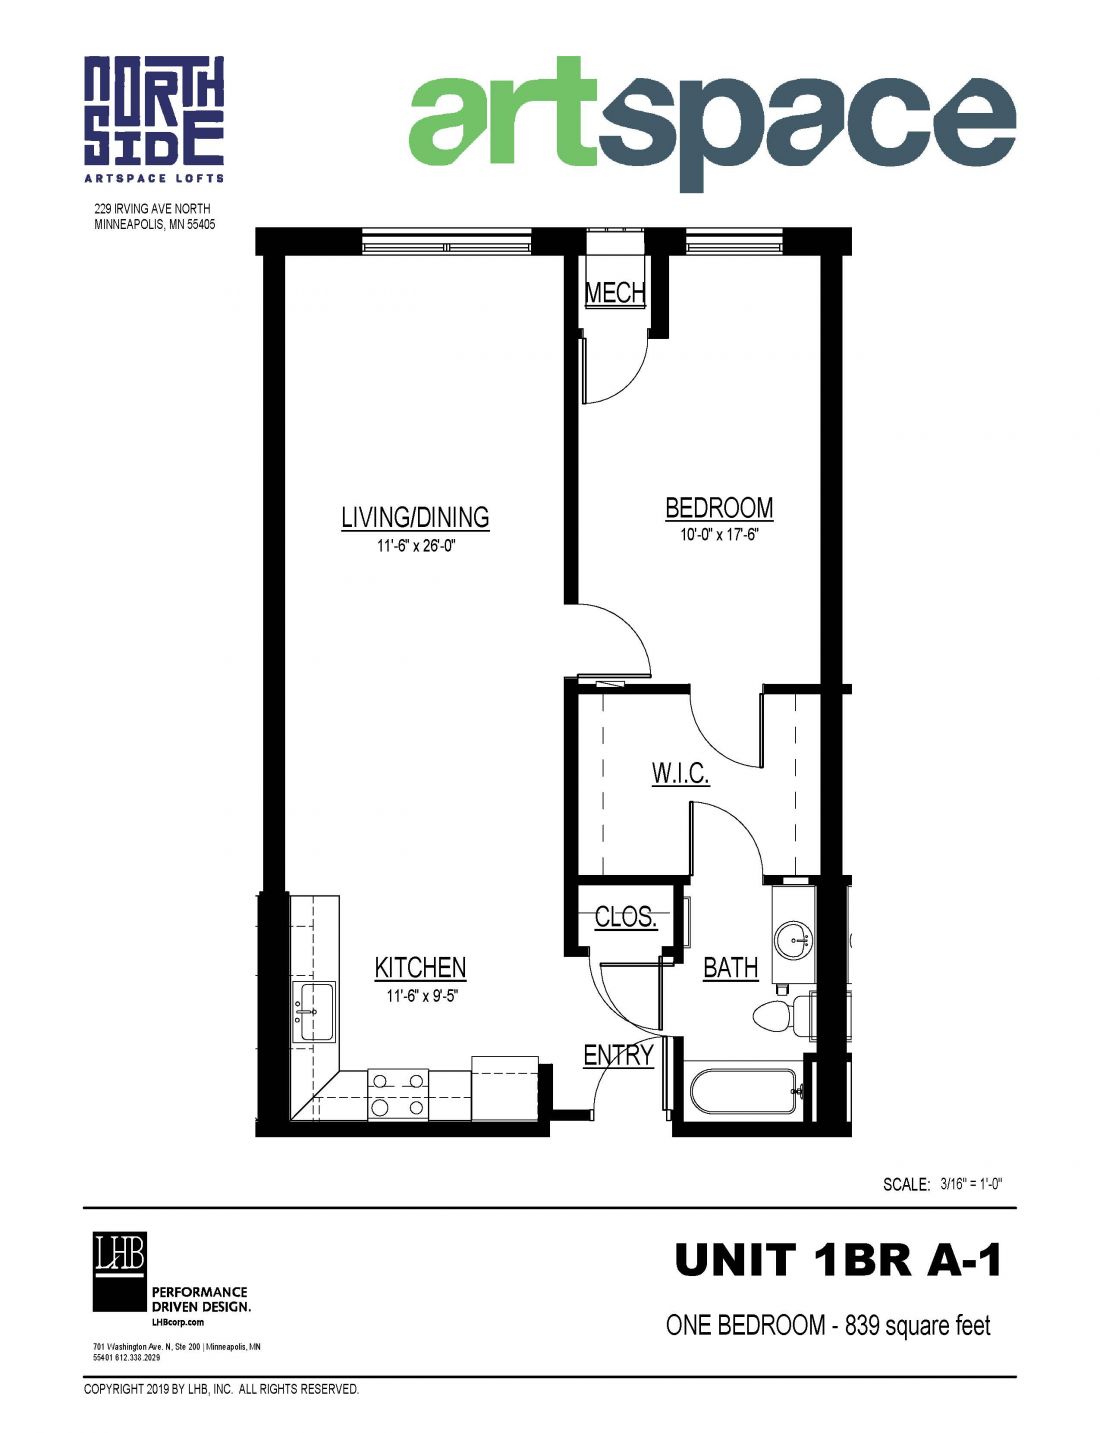 1 Bedroom Floor Plan for Unit 1BR A-1.